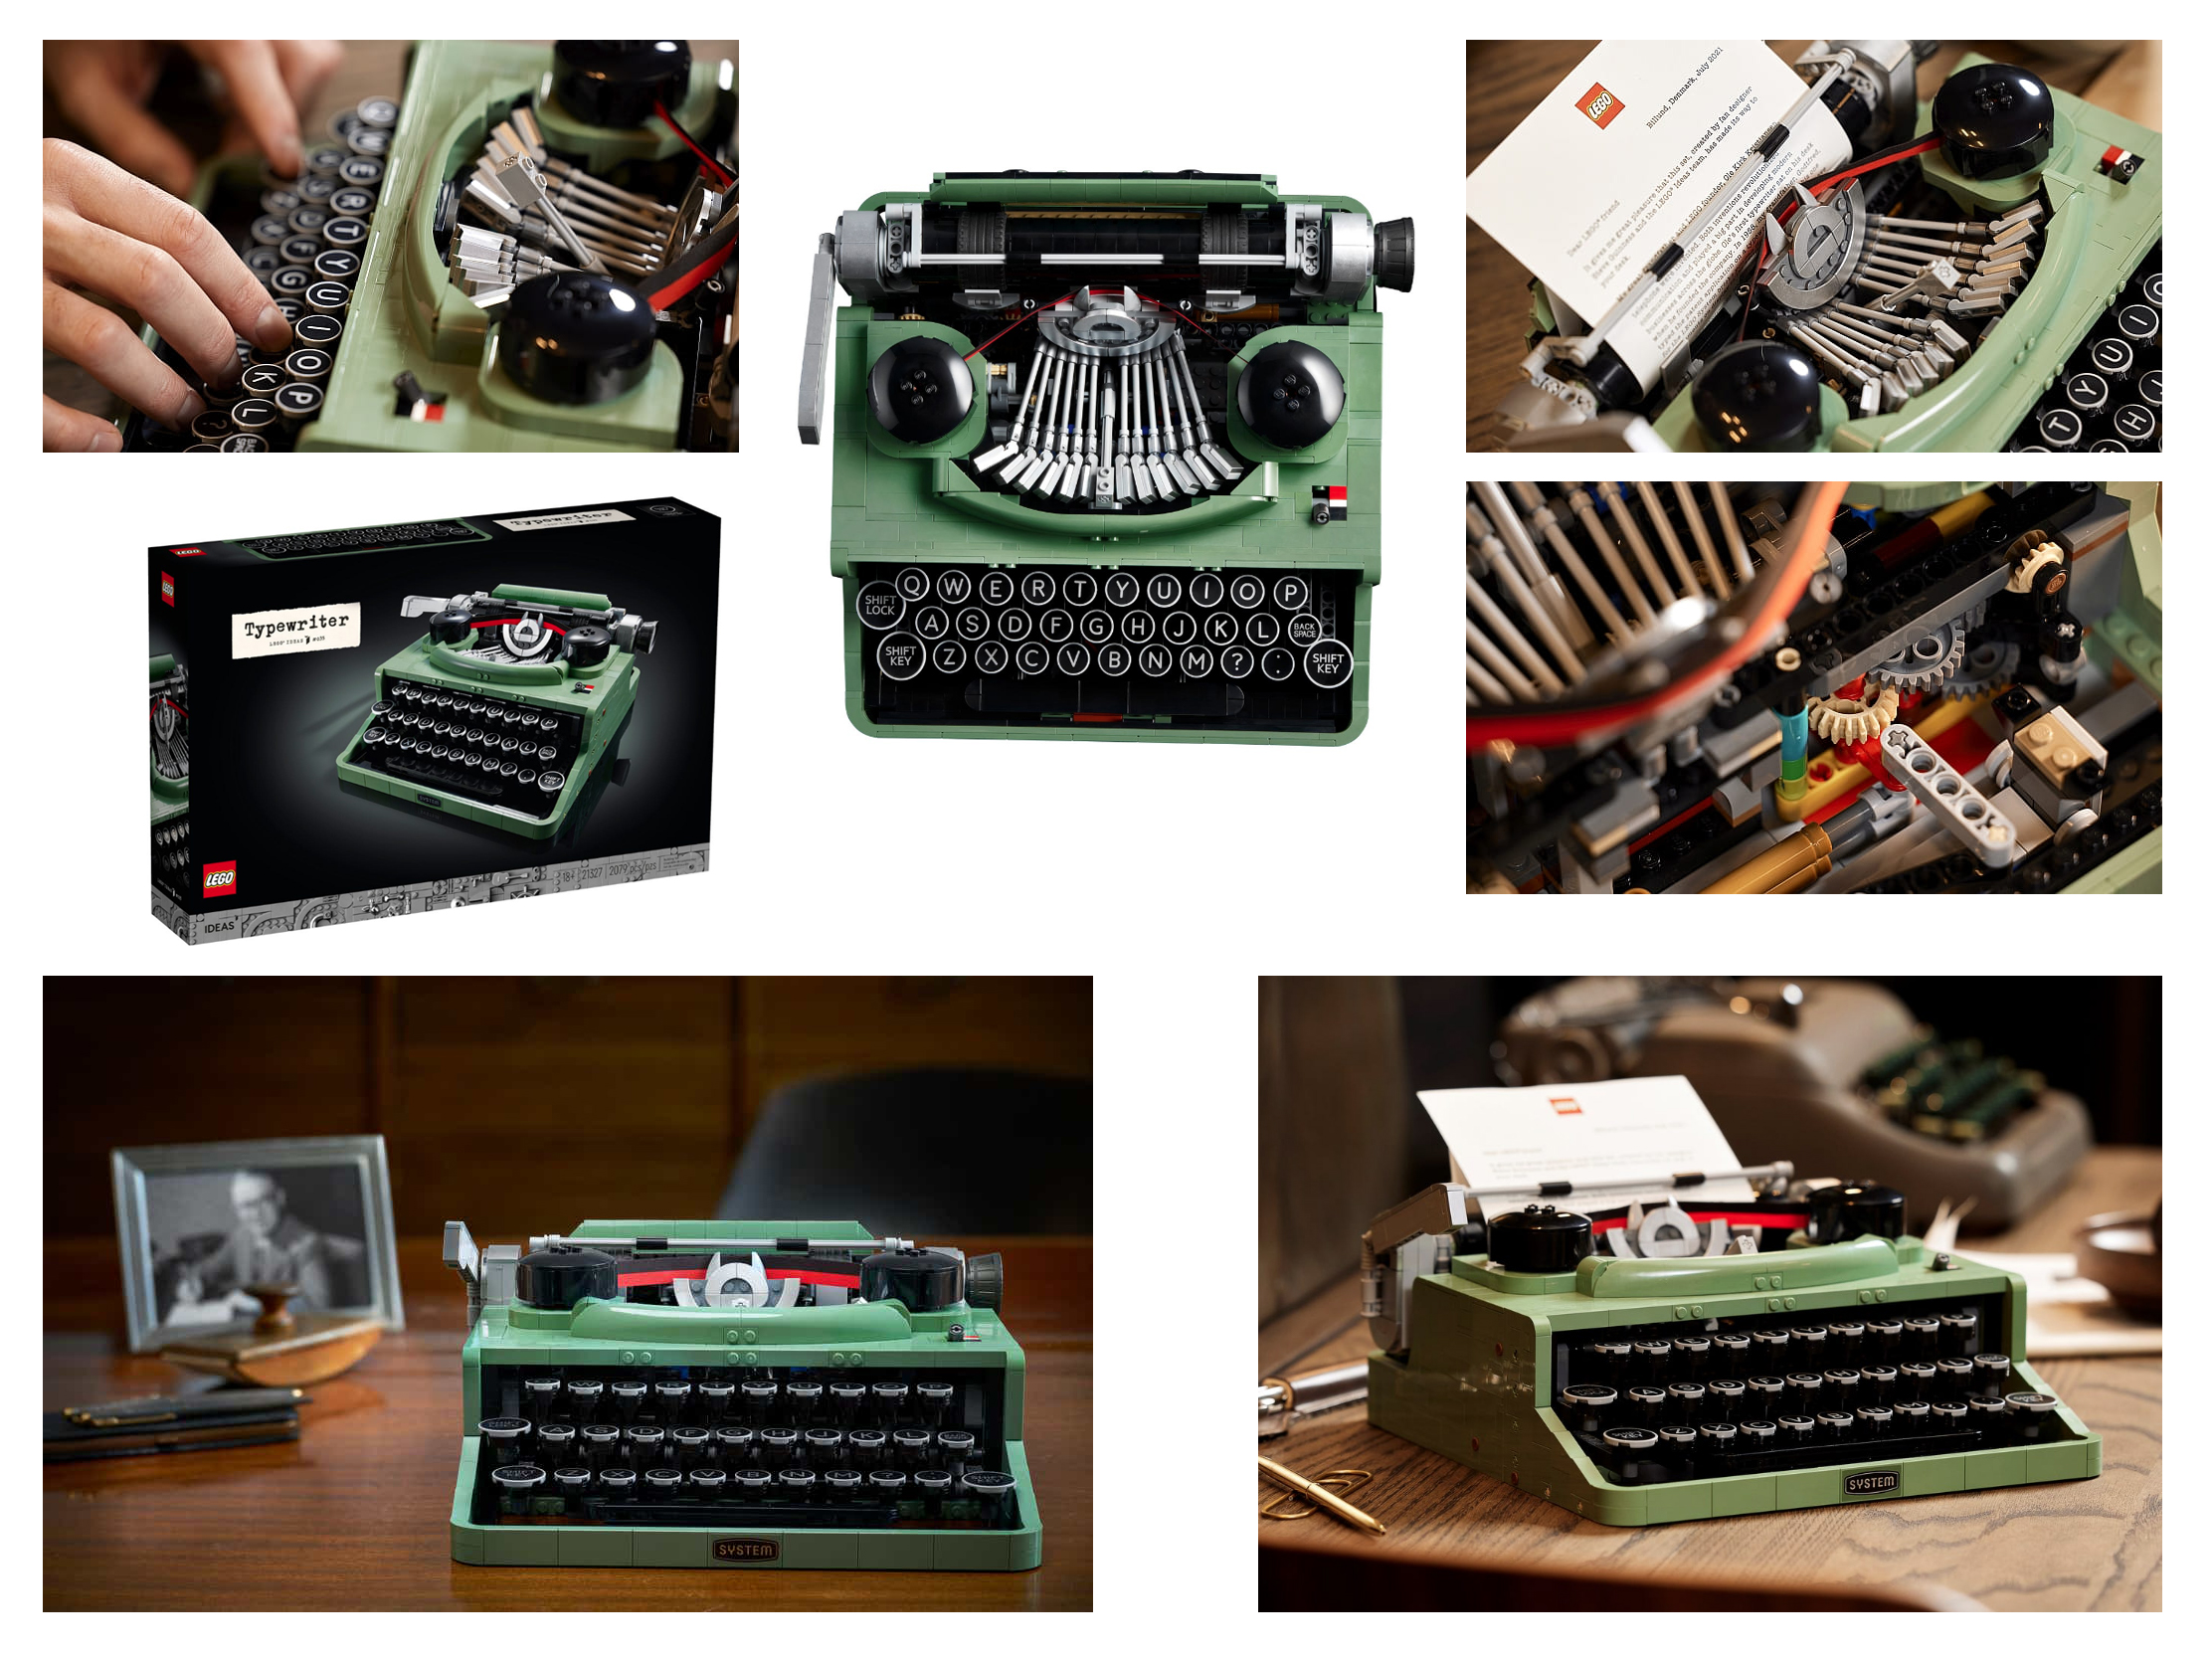 Lego mid-century modern typewriter